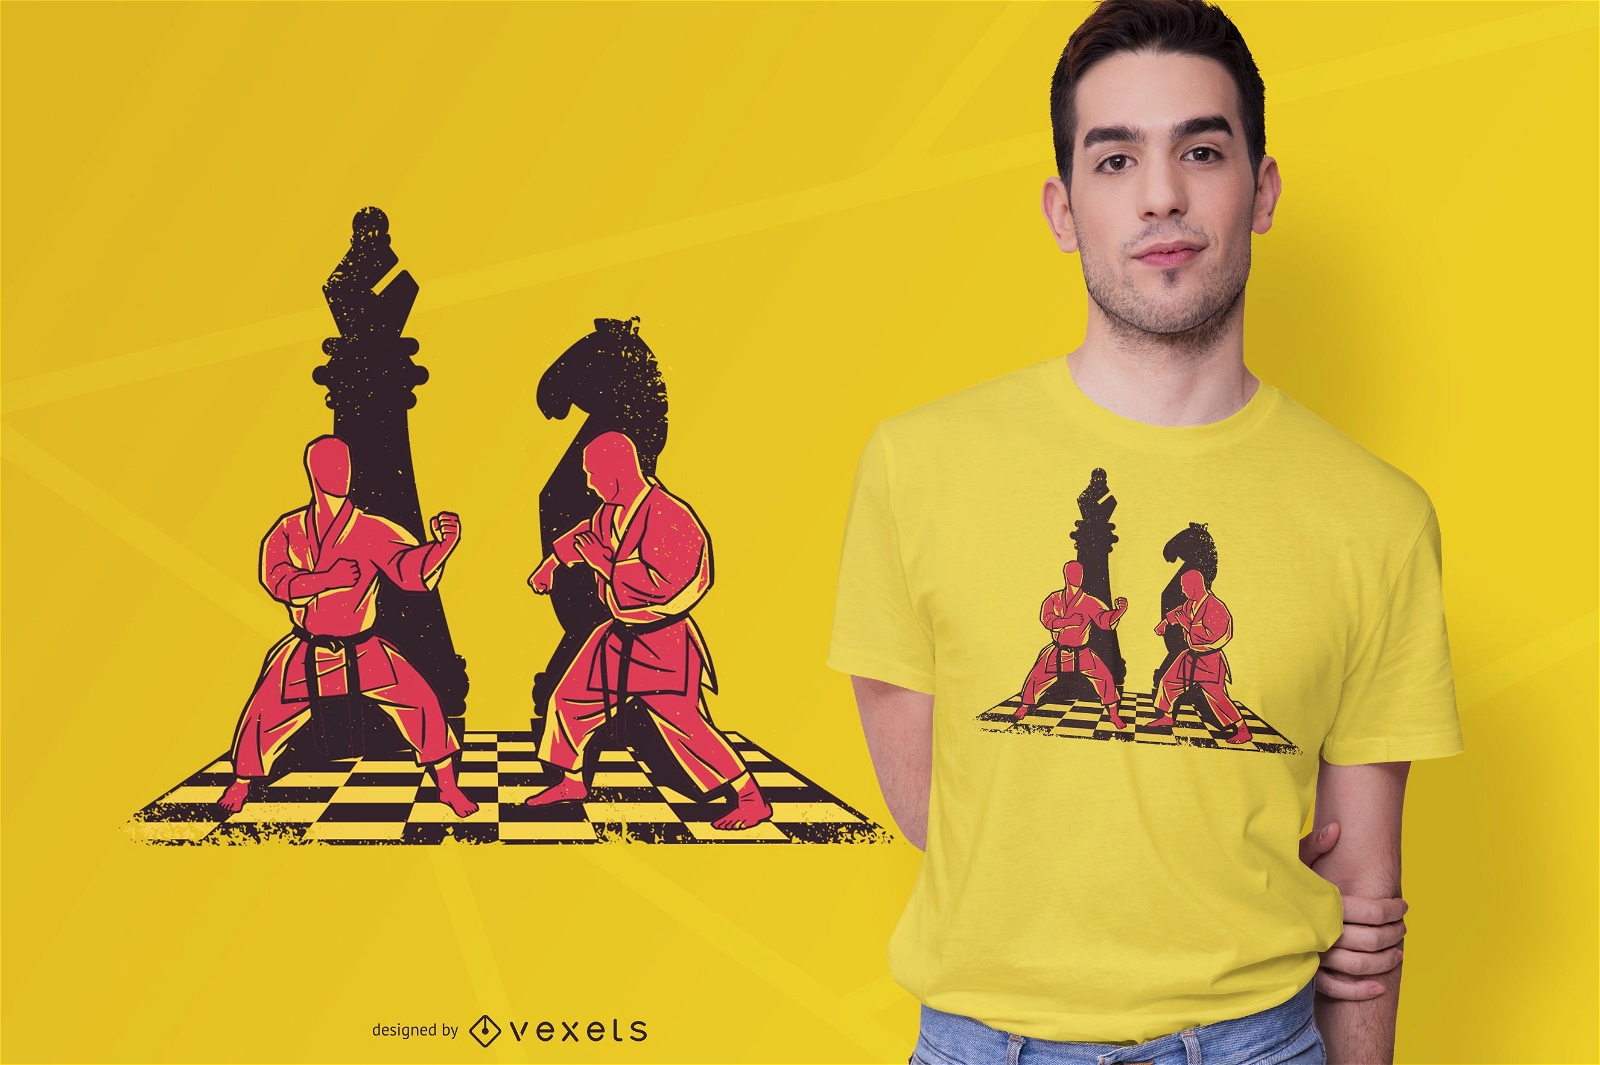 Dise?o de camiseta de piezas de ajedrez de artista marcial